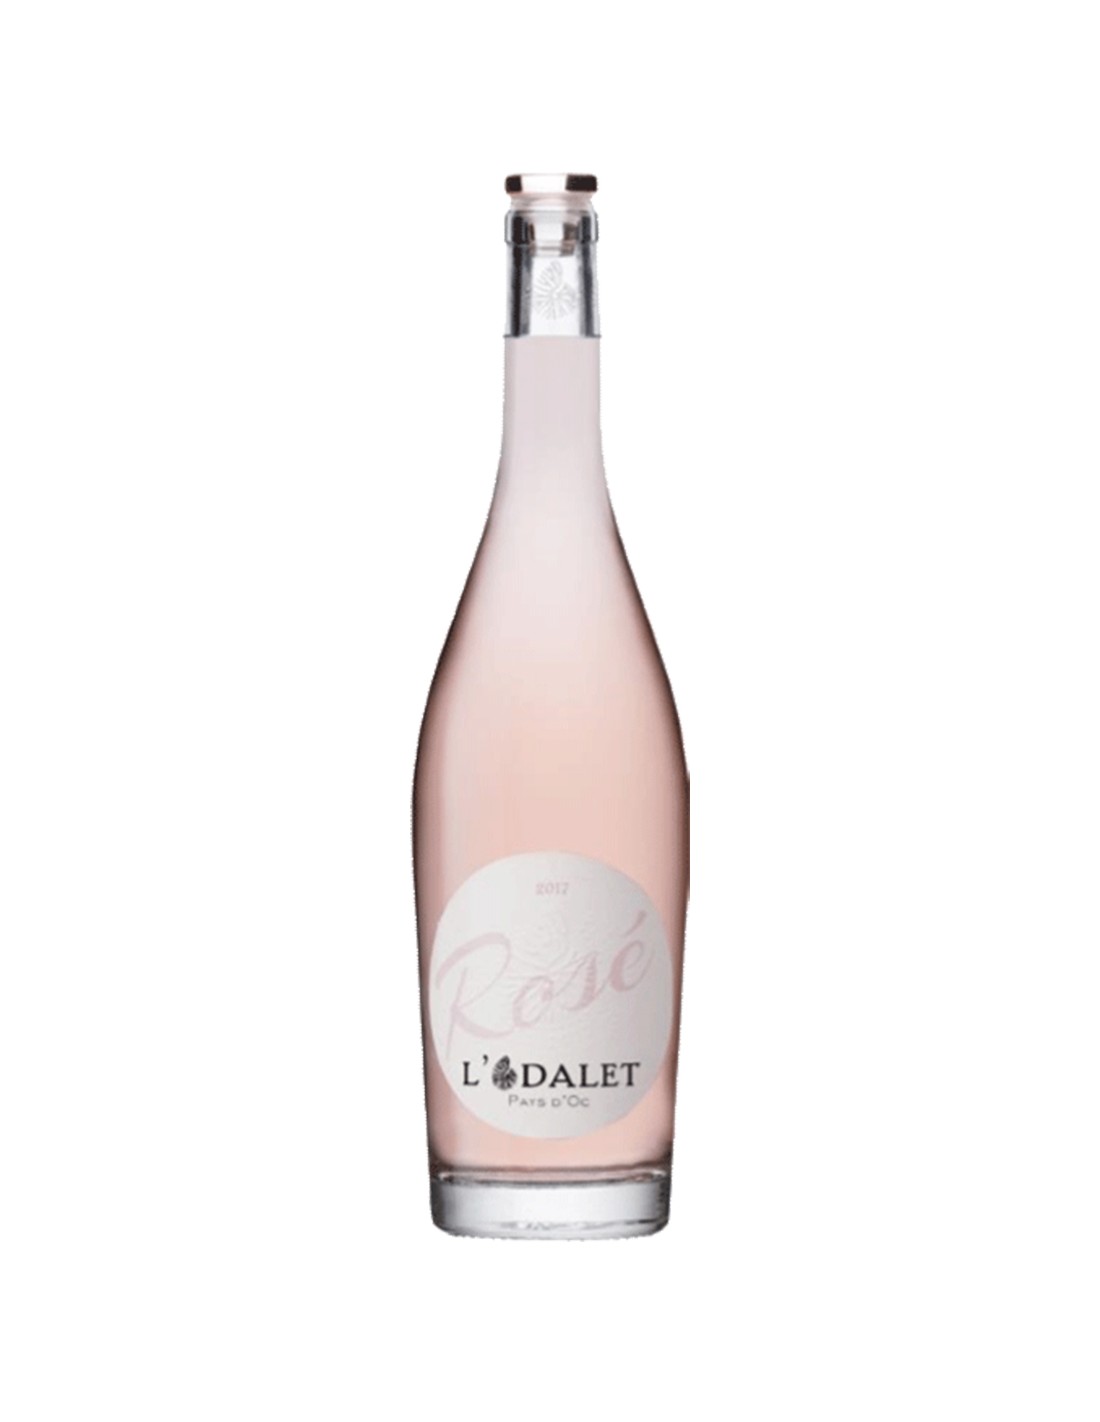 Vin roze sec, Cupaj, Le Rose de L’Odalet Pays D’Oc IGP, 12.5% alc., 0.75L, Franta alcooldiscount.ro